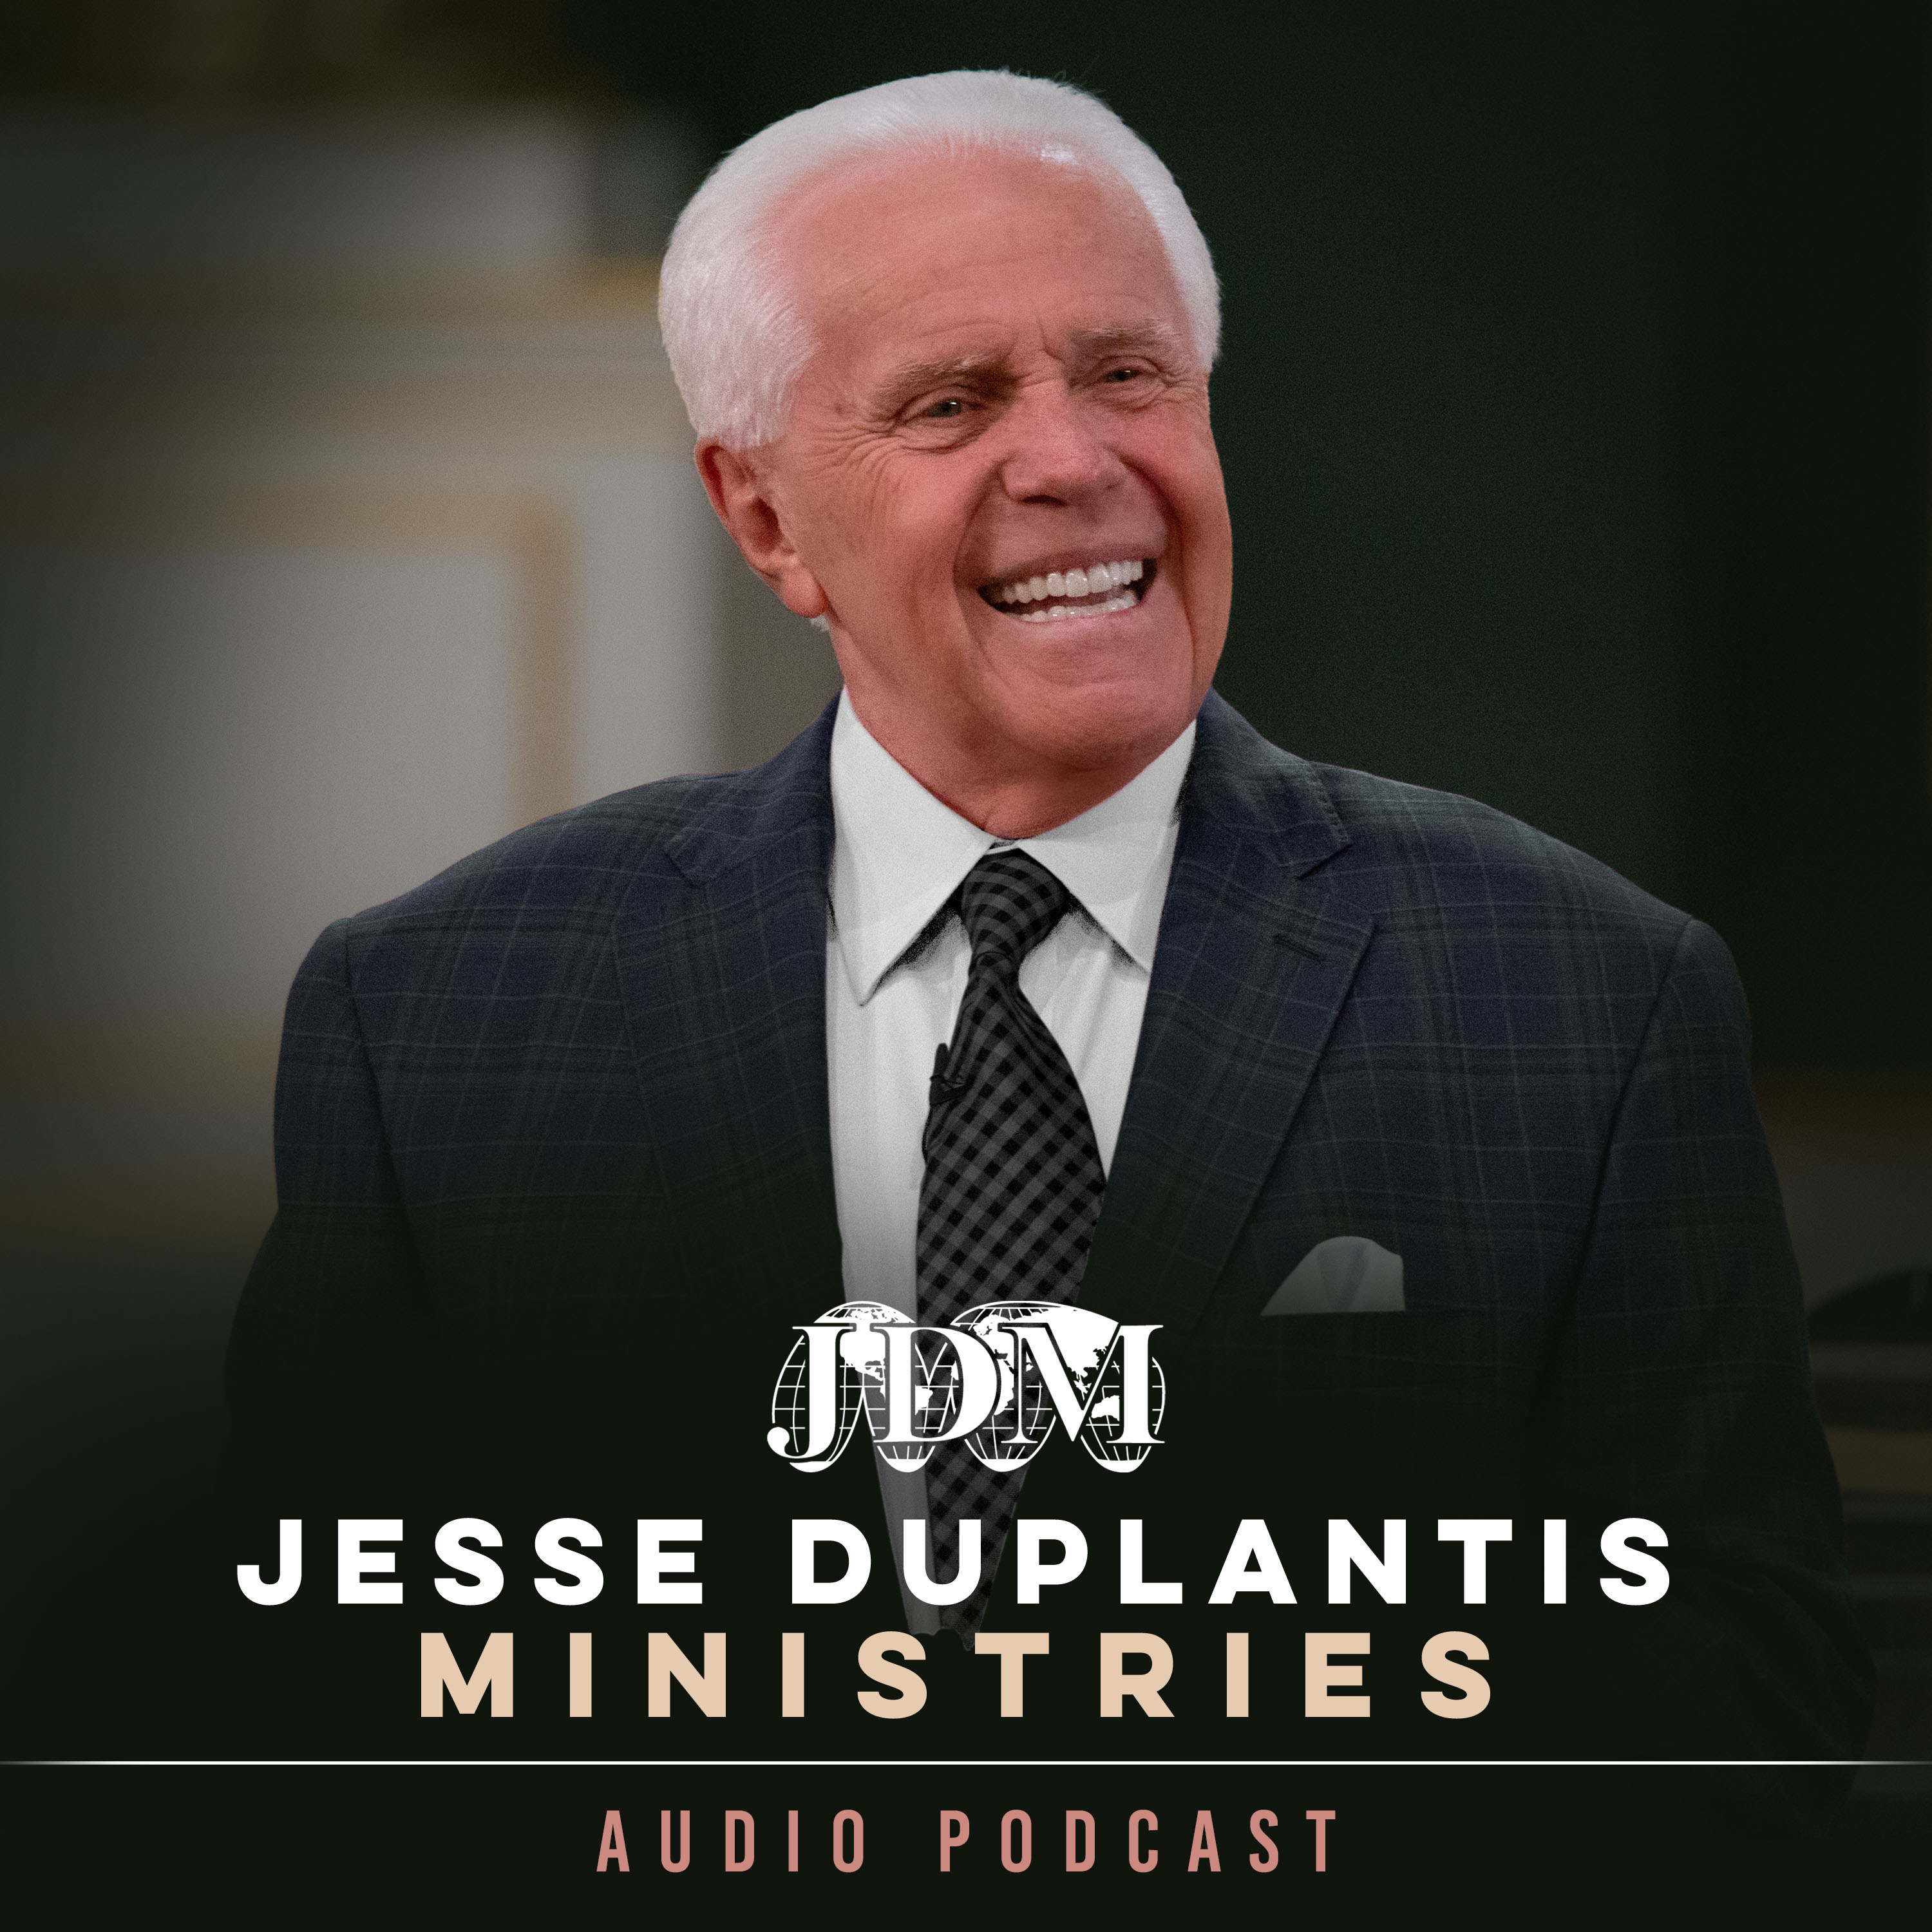 Jesse Duplantis Ministries Audio Podcast